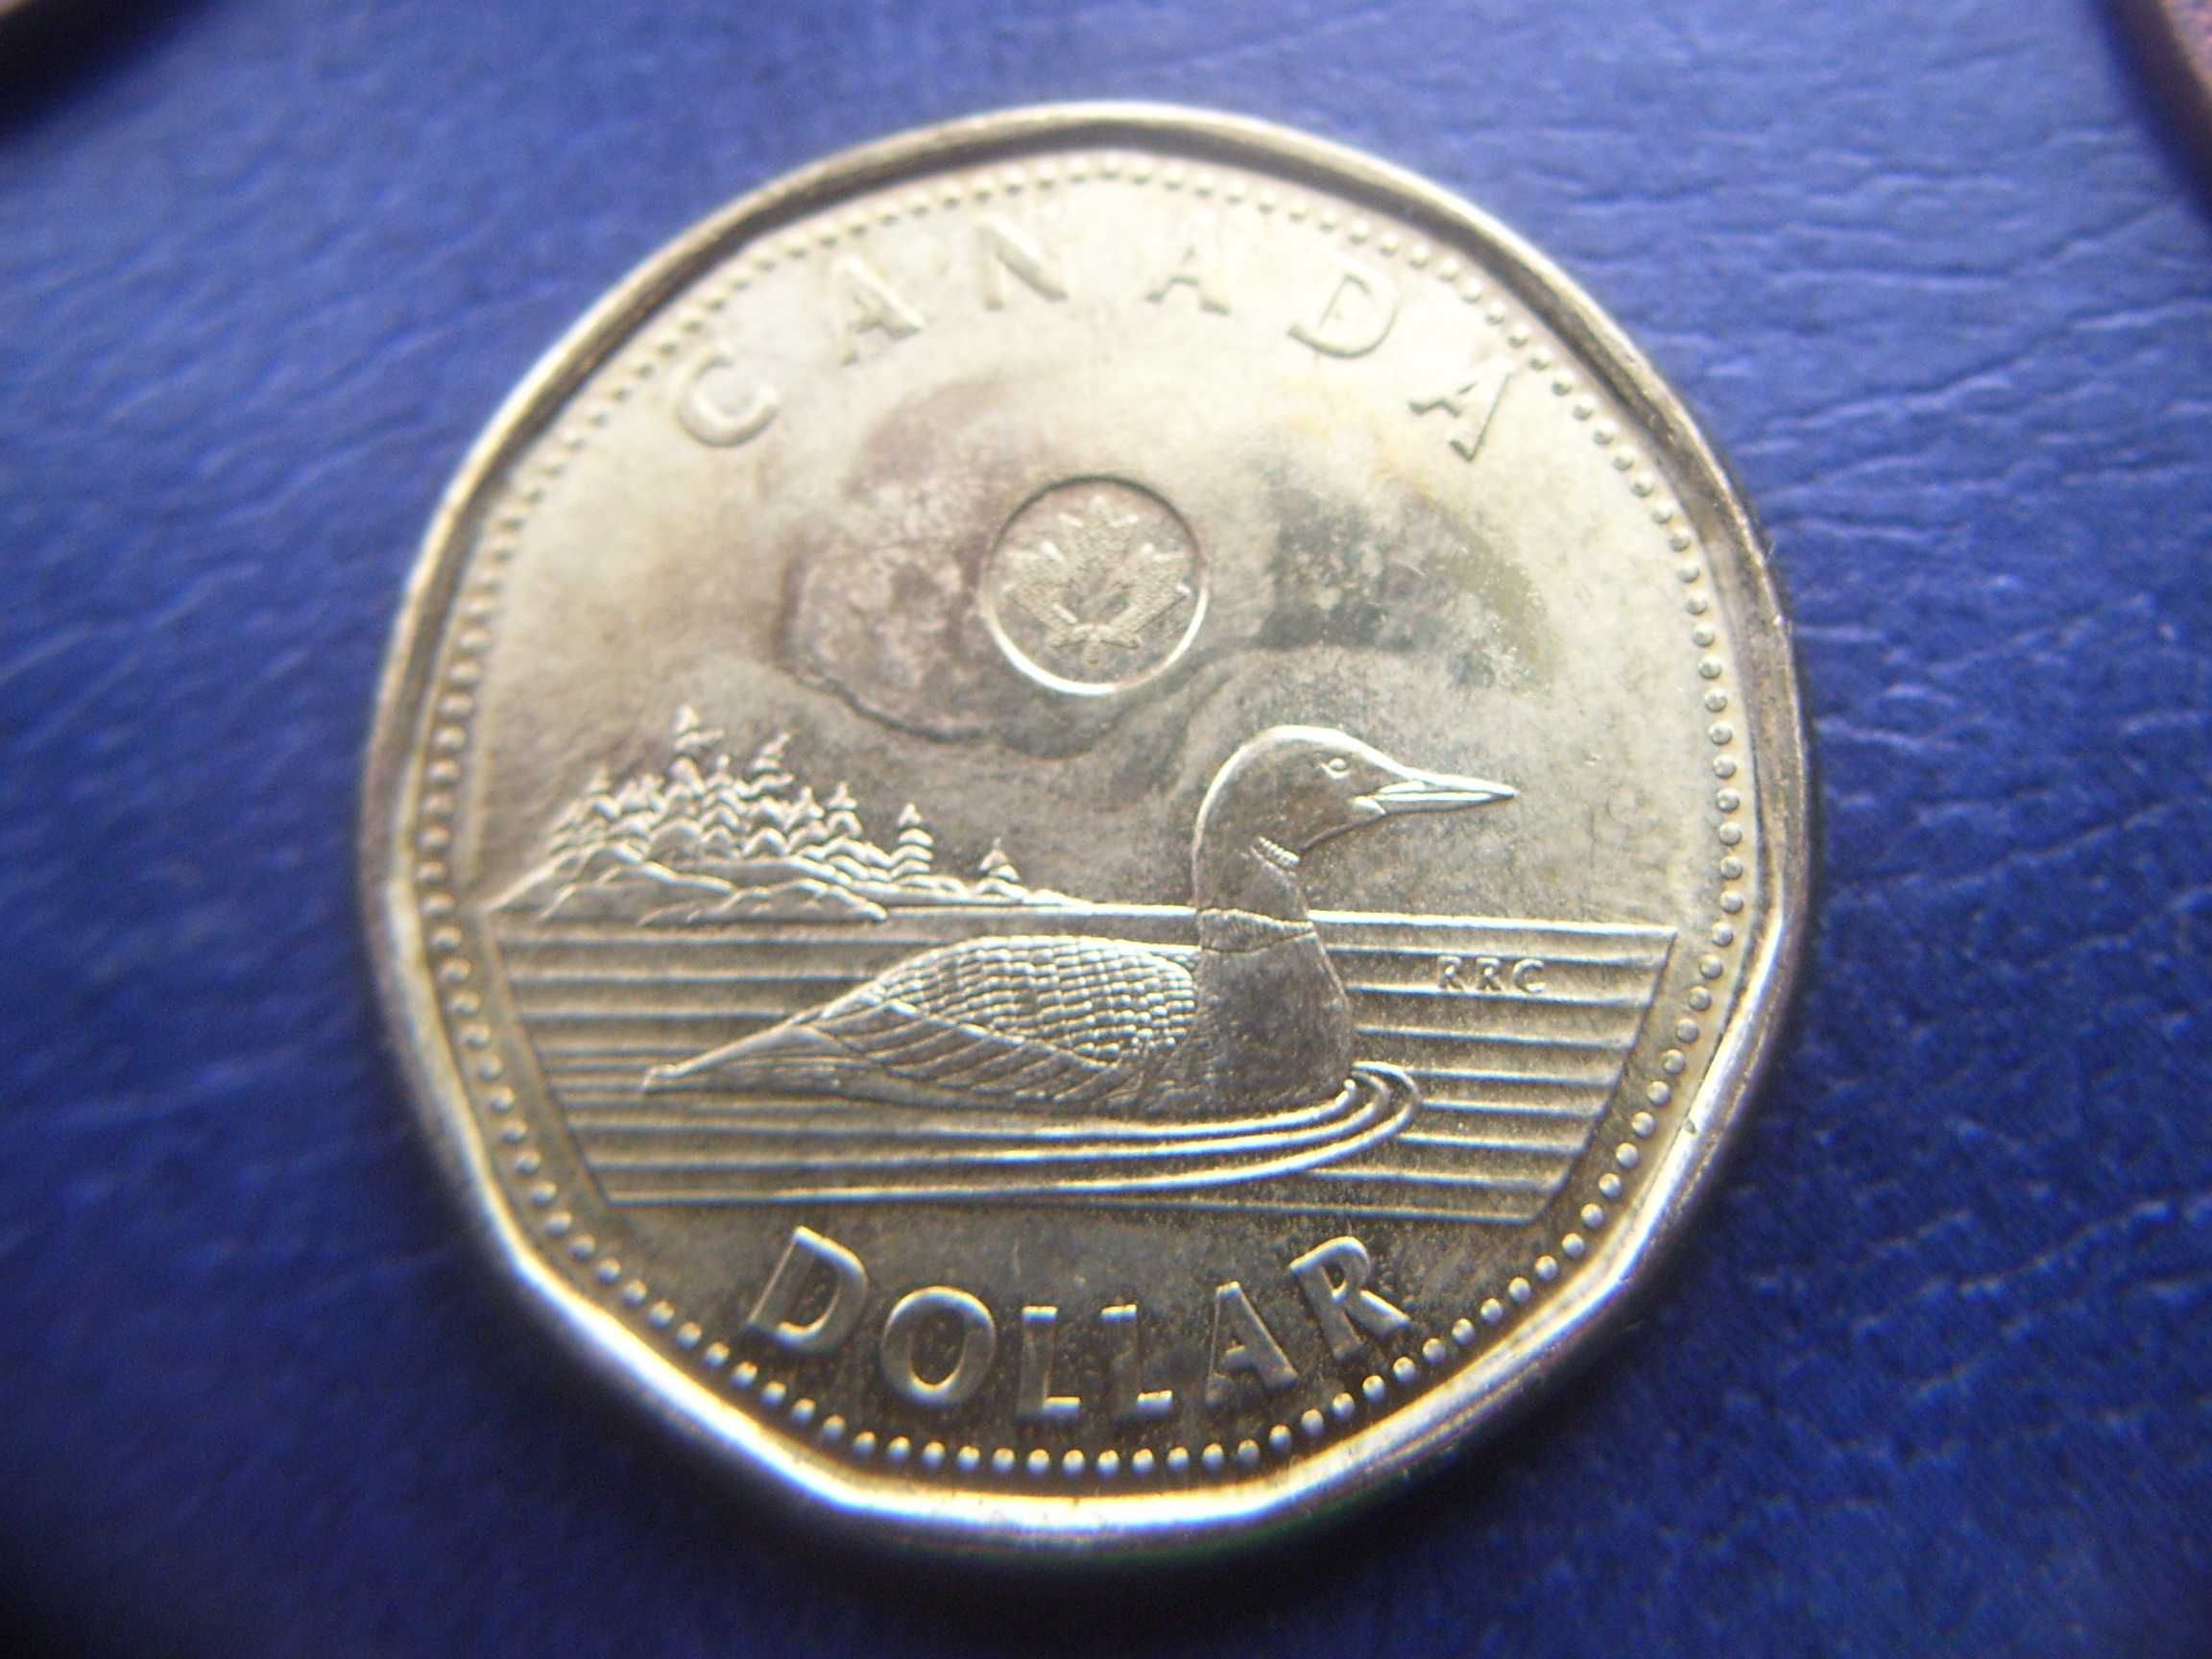 Stare monety 1 dolar 2019 Kanada ładna